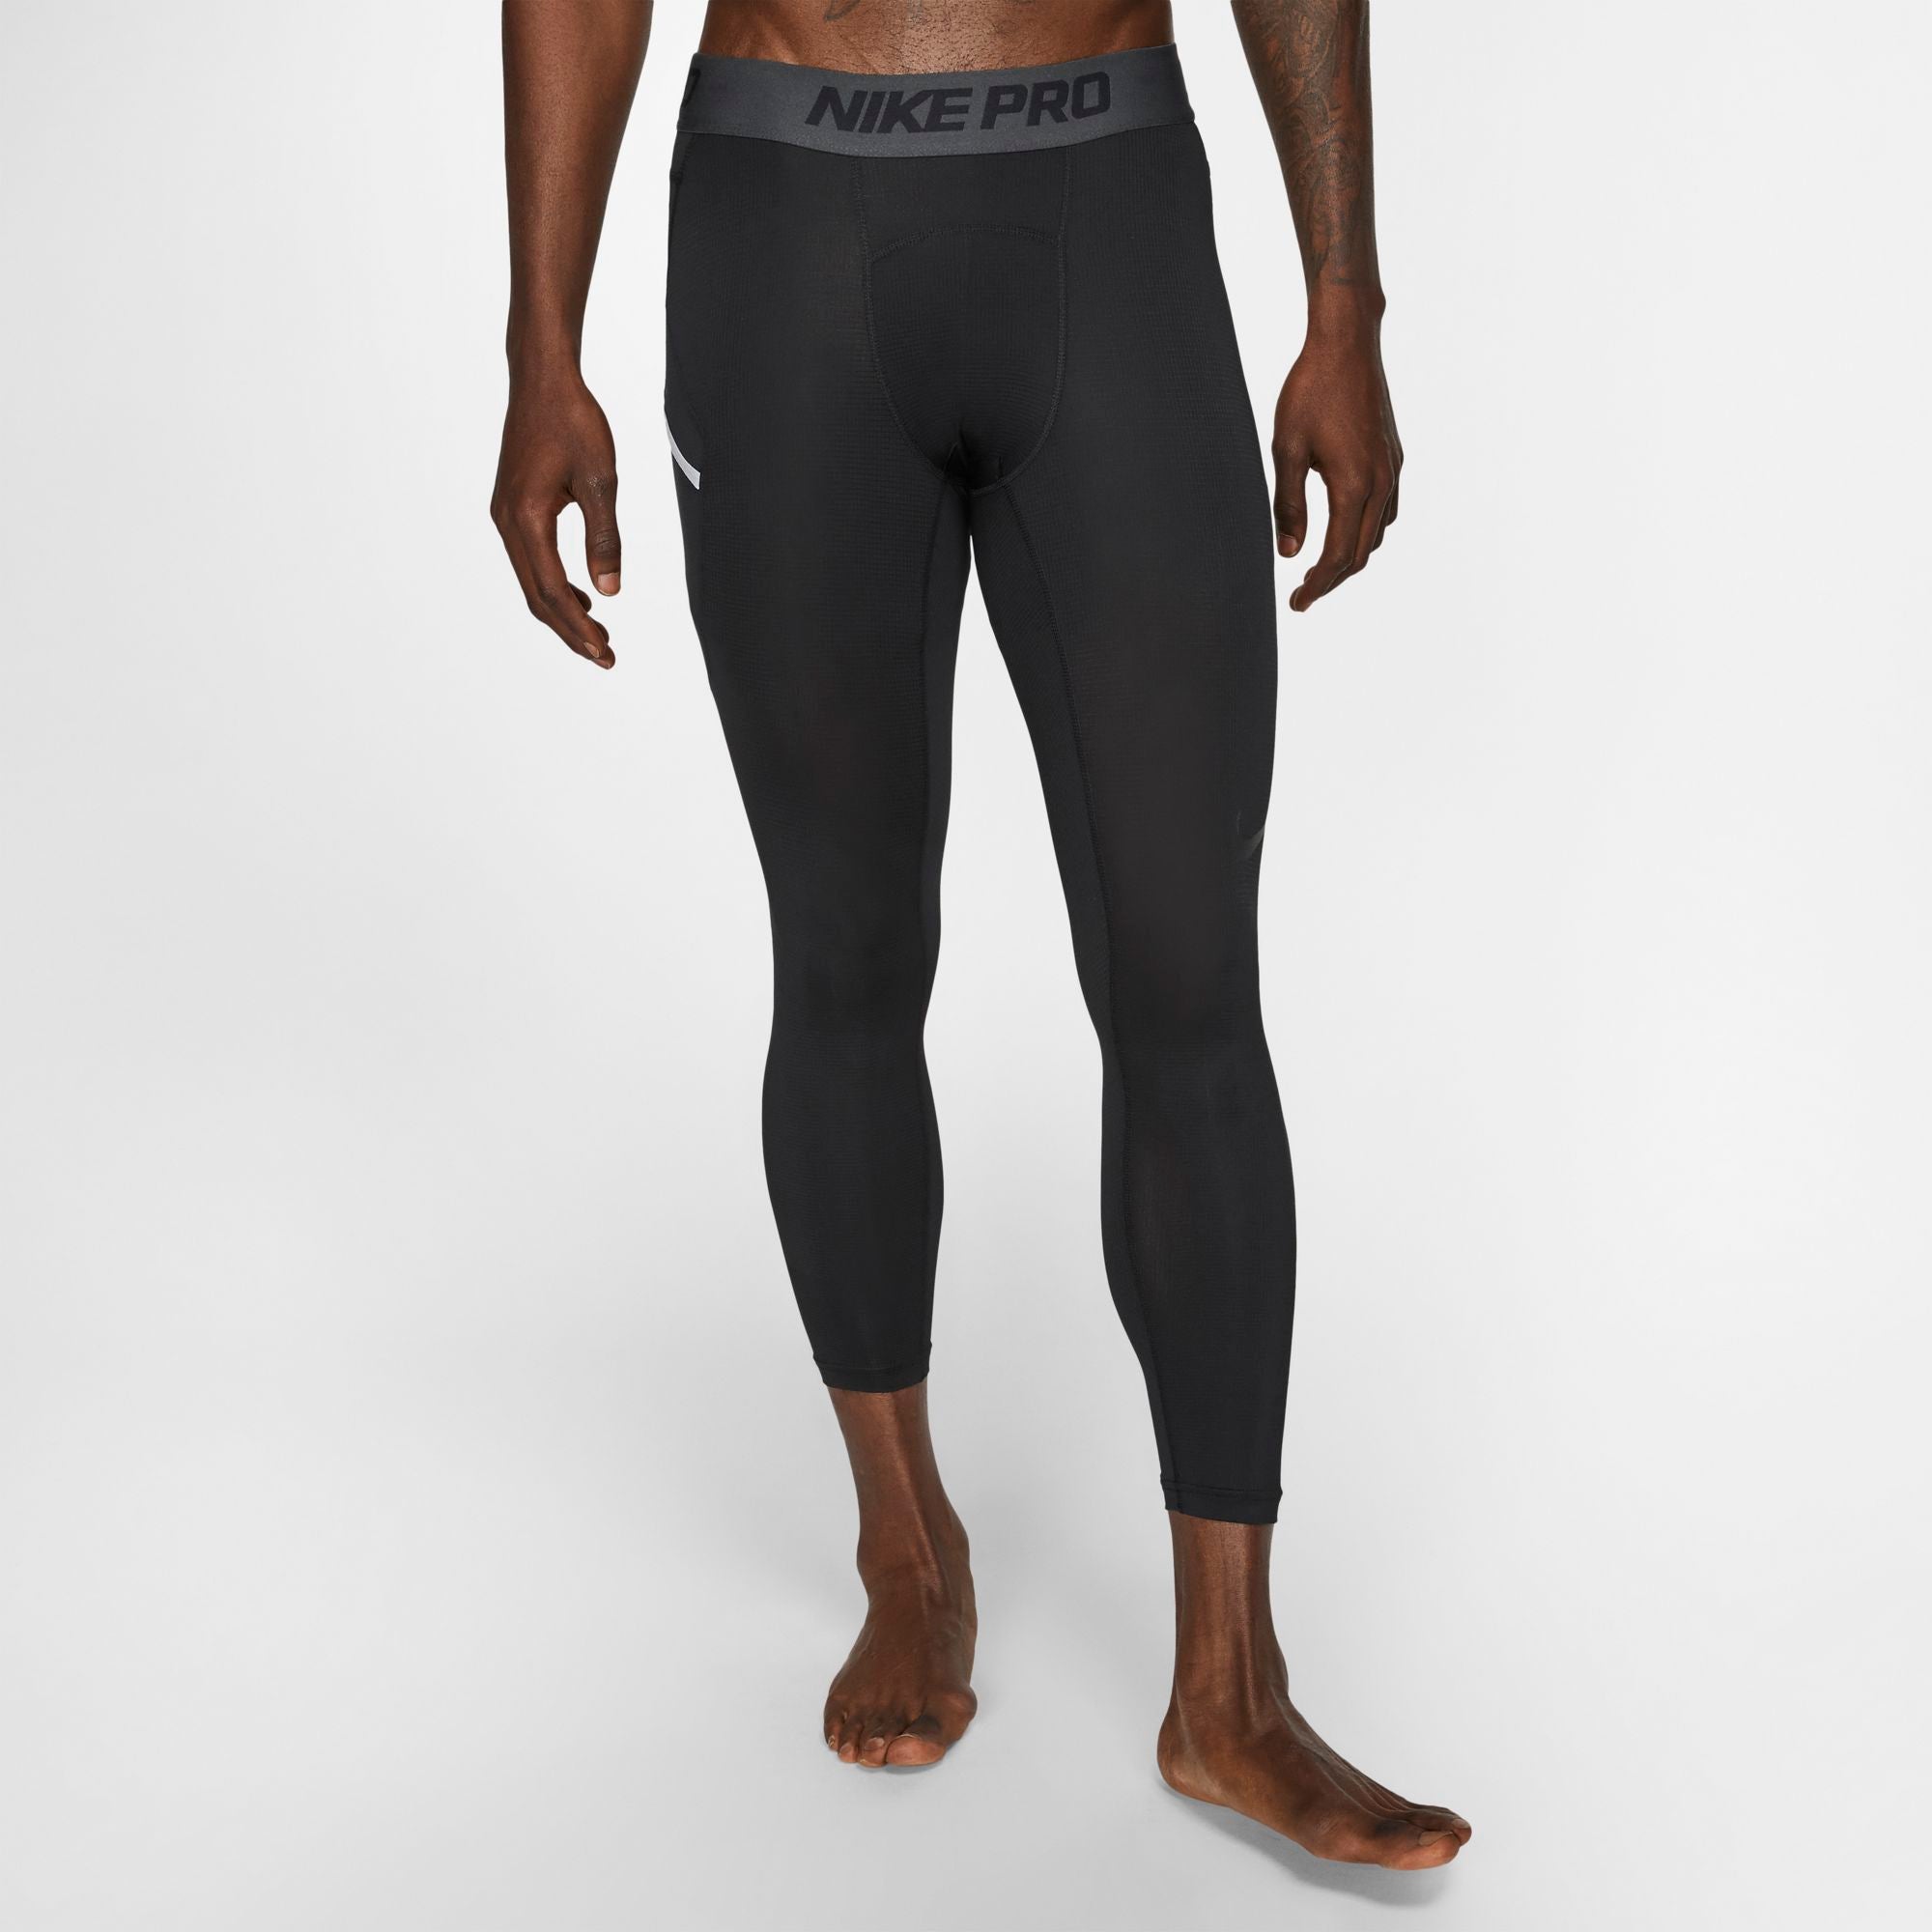 Men's Sports Leggings 3/4 Compression Pants Training Basketball